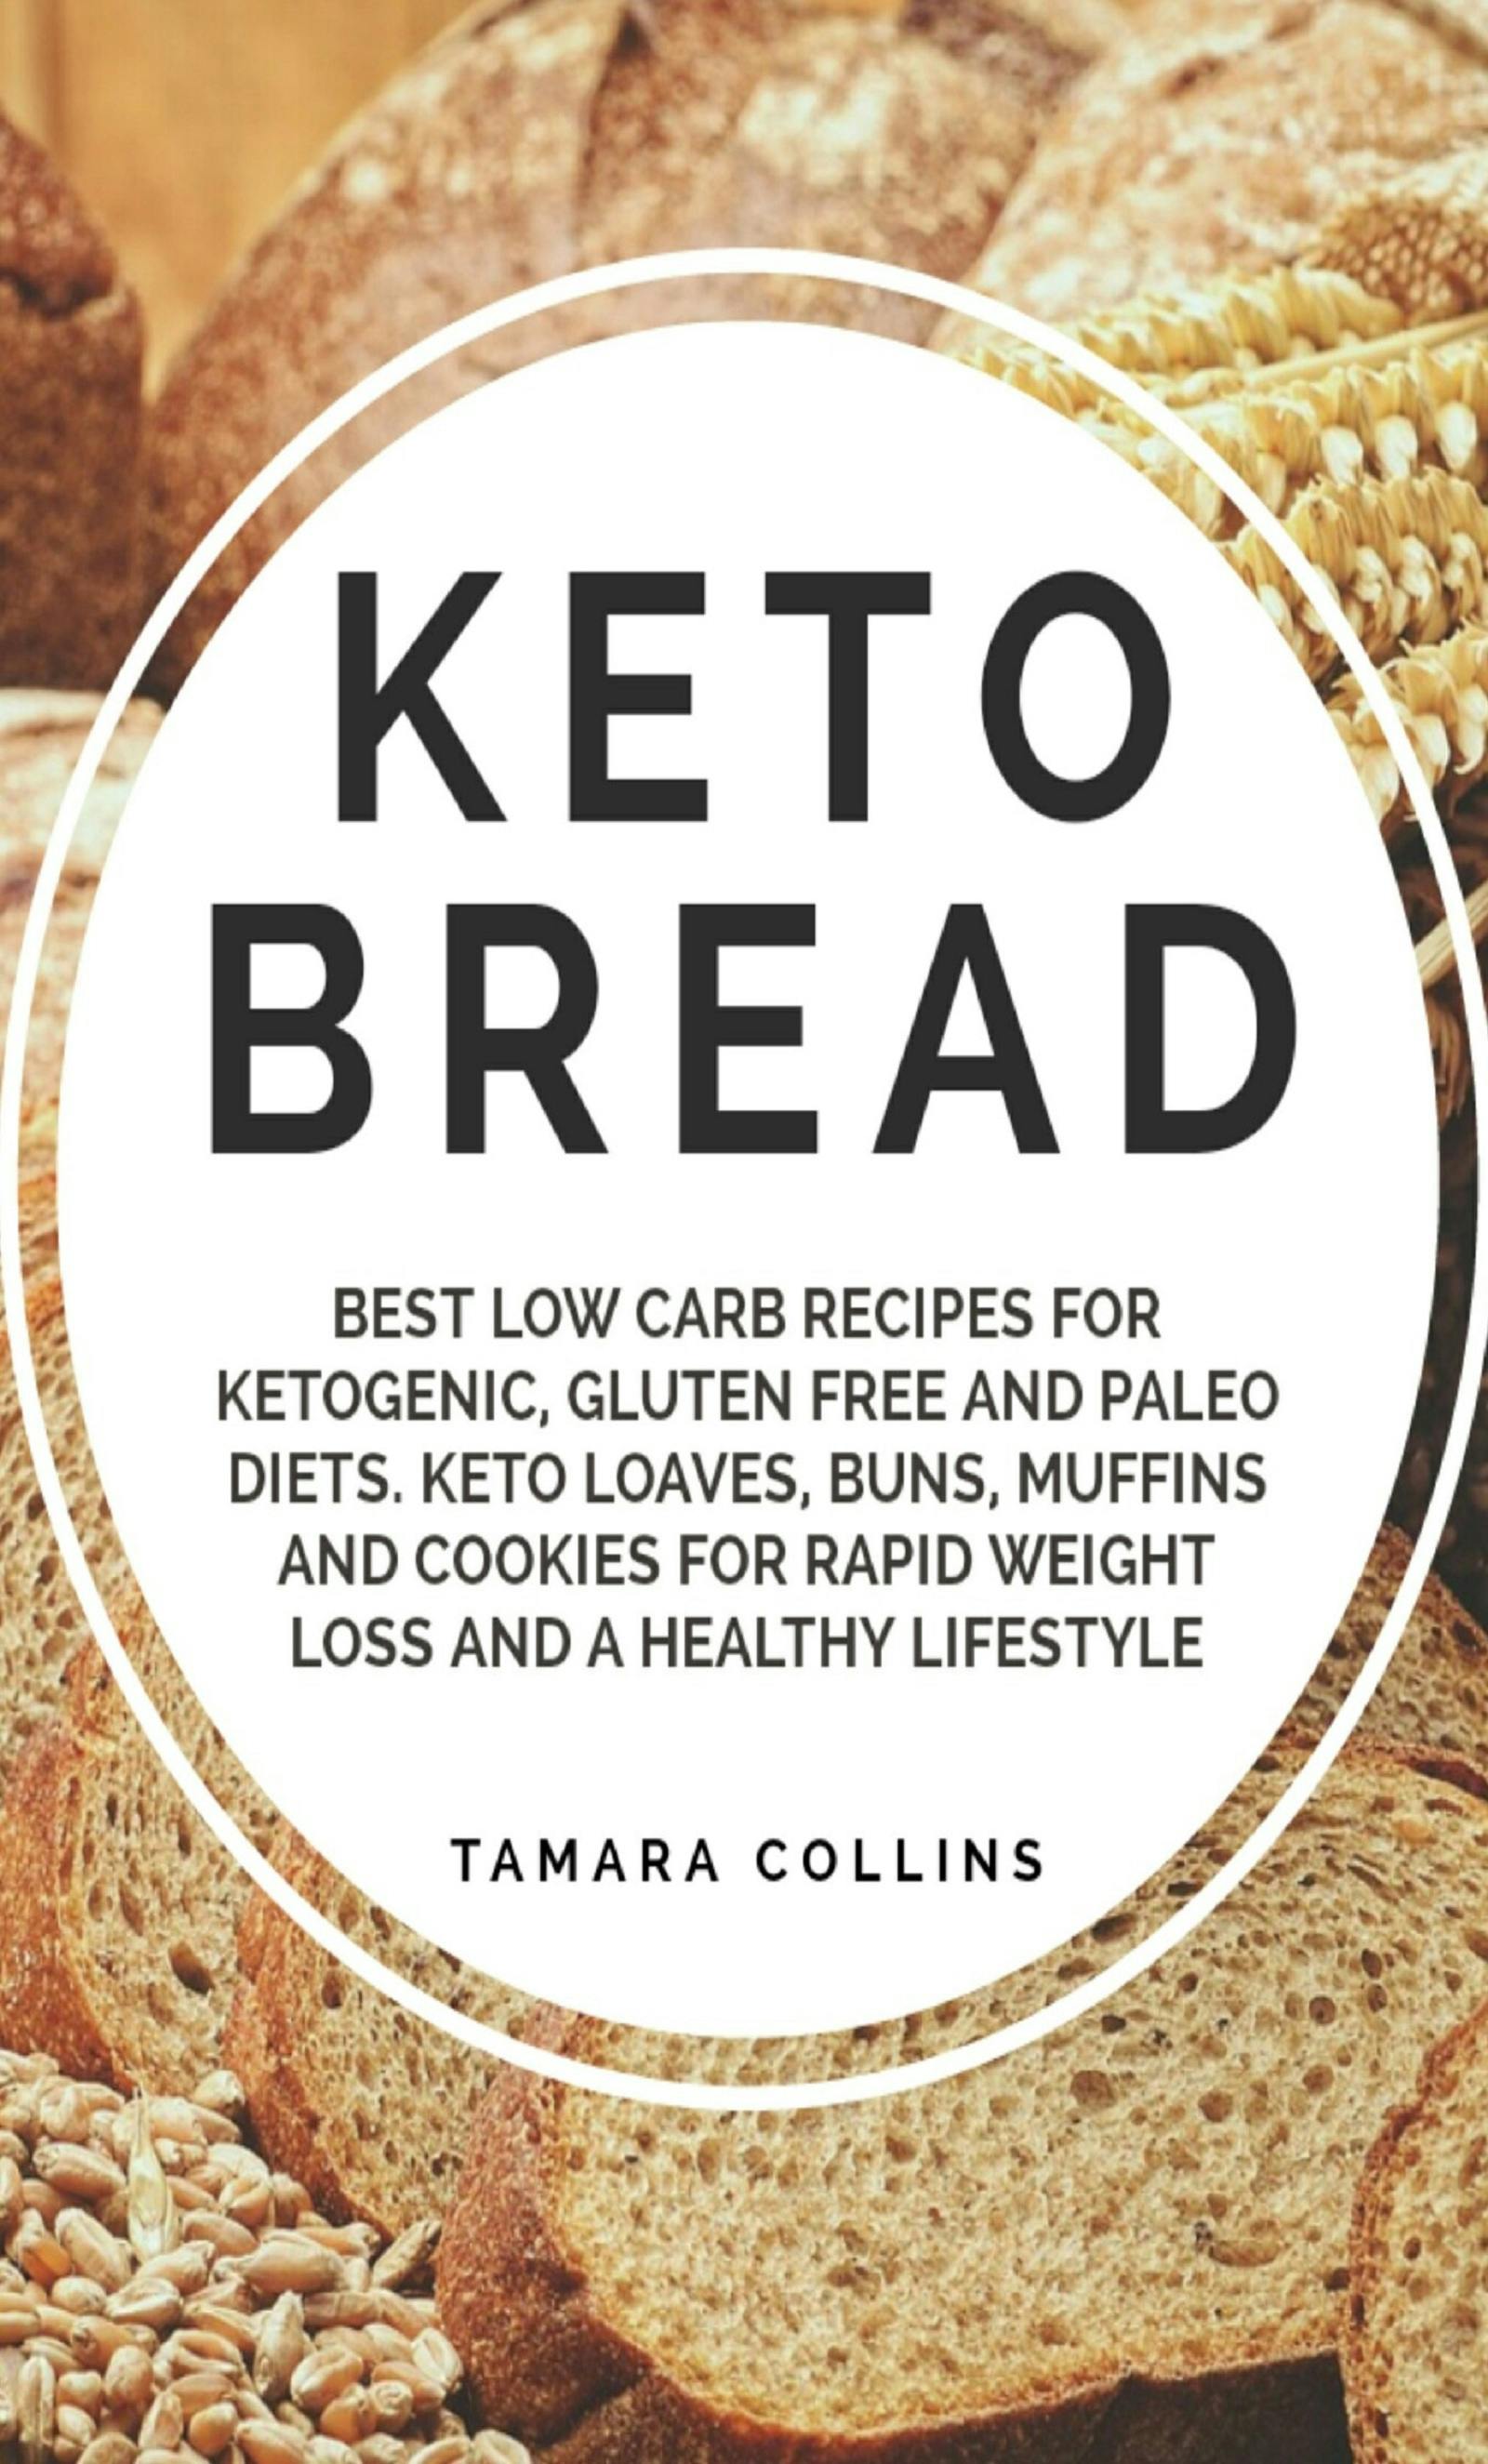 Keto Bread - undefined